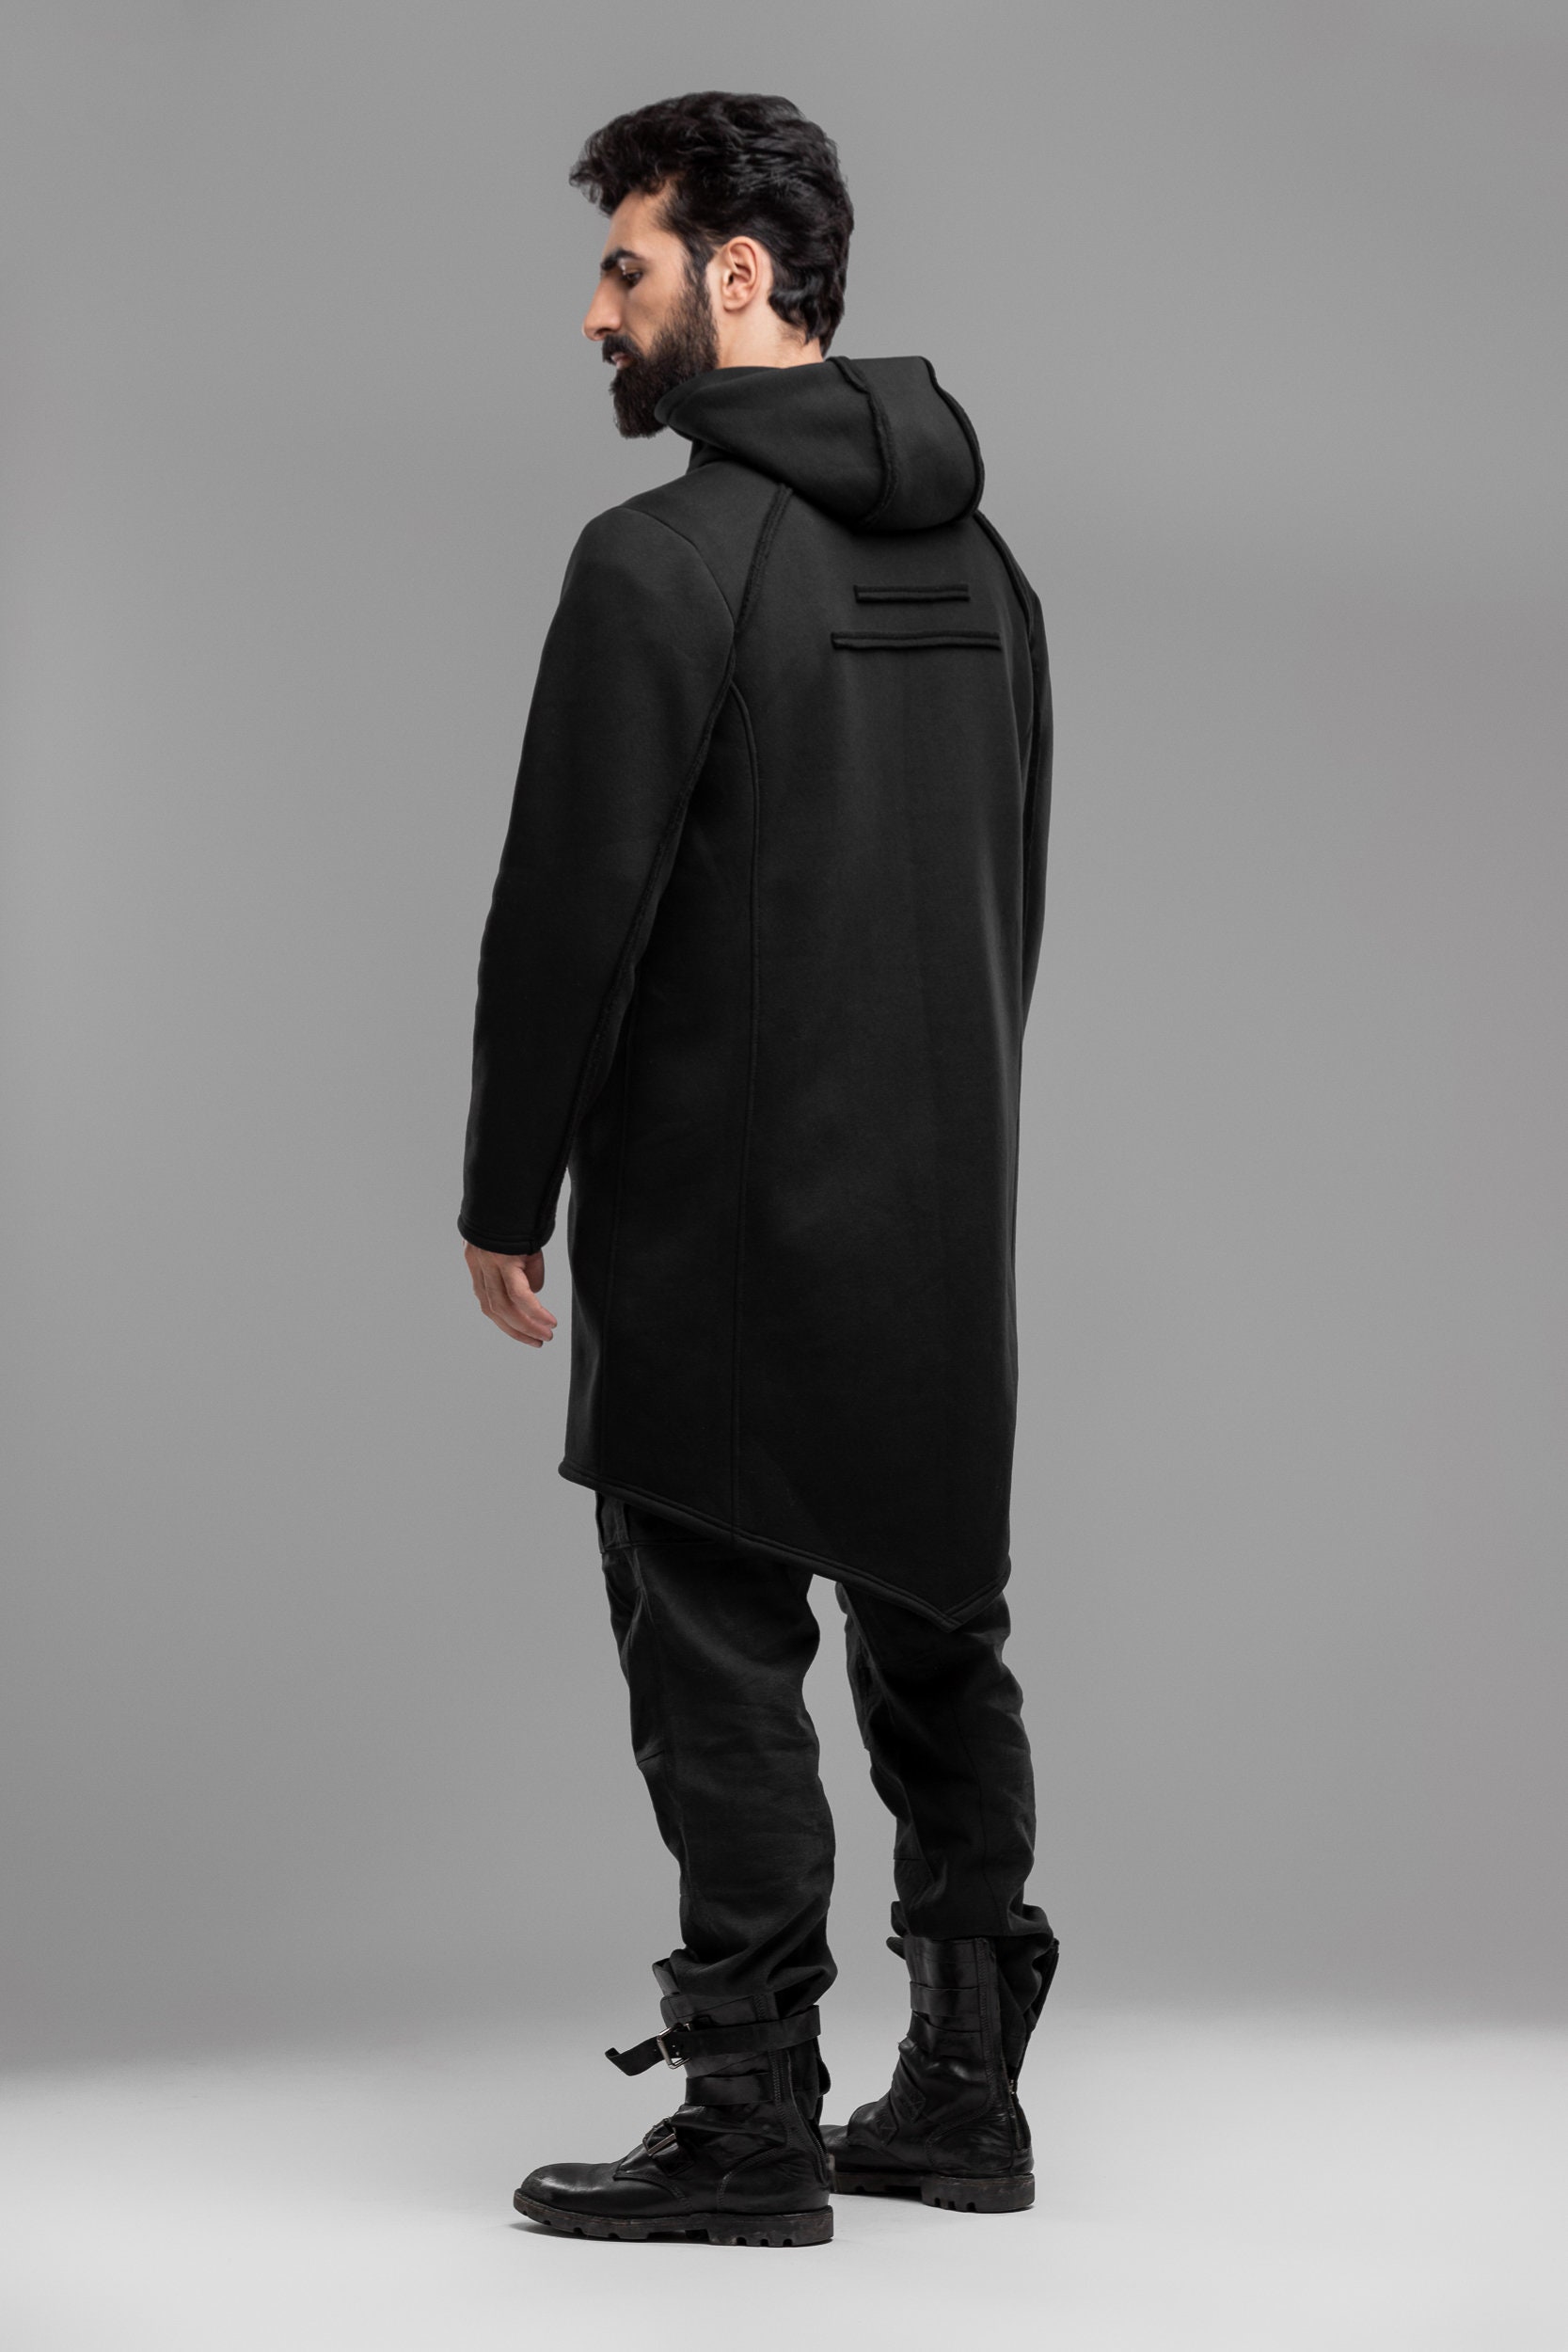 Cardigan men long trench coat black jacket asymmetric top | Etsy